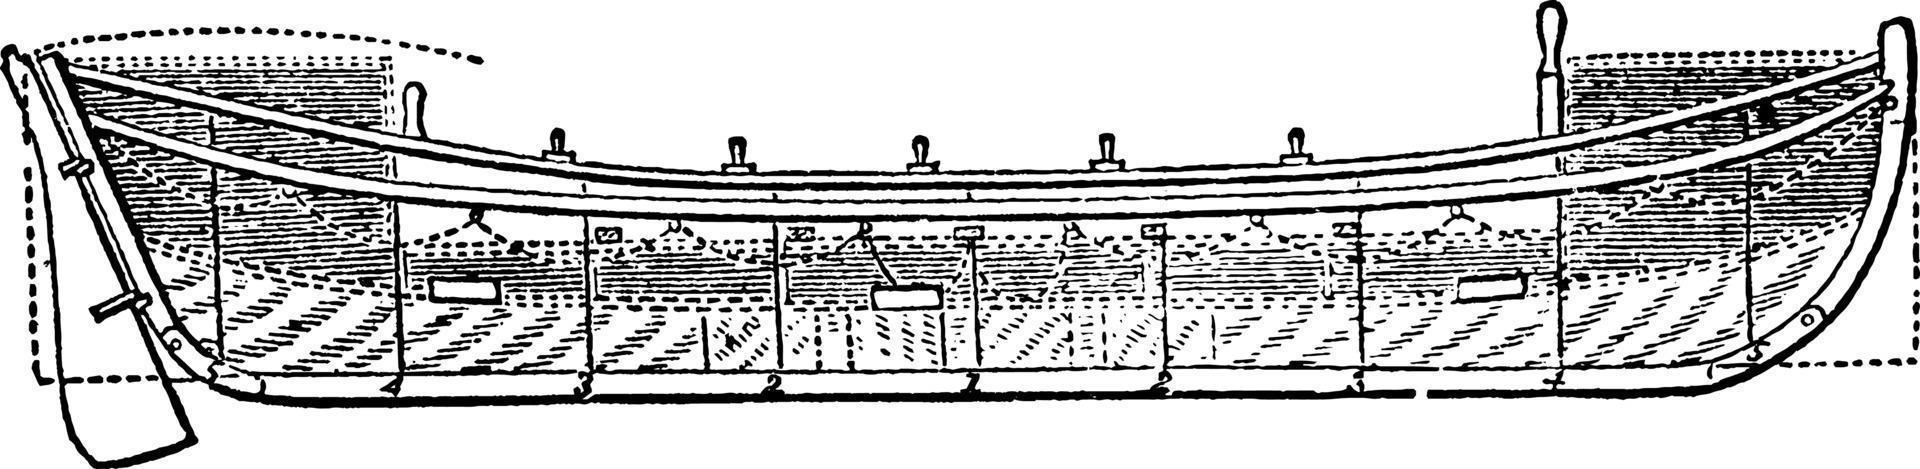 Rettungsboot, Vintage Illustration. vektor